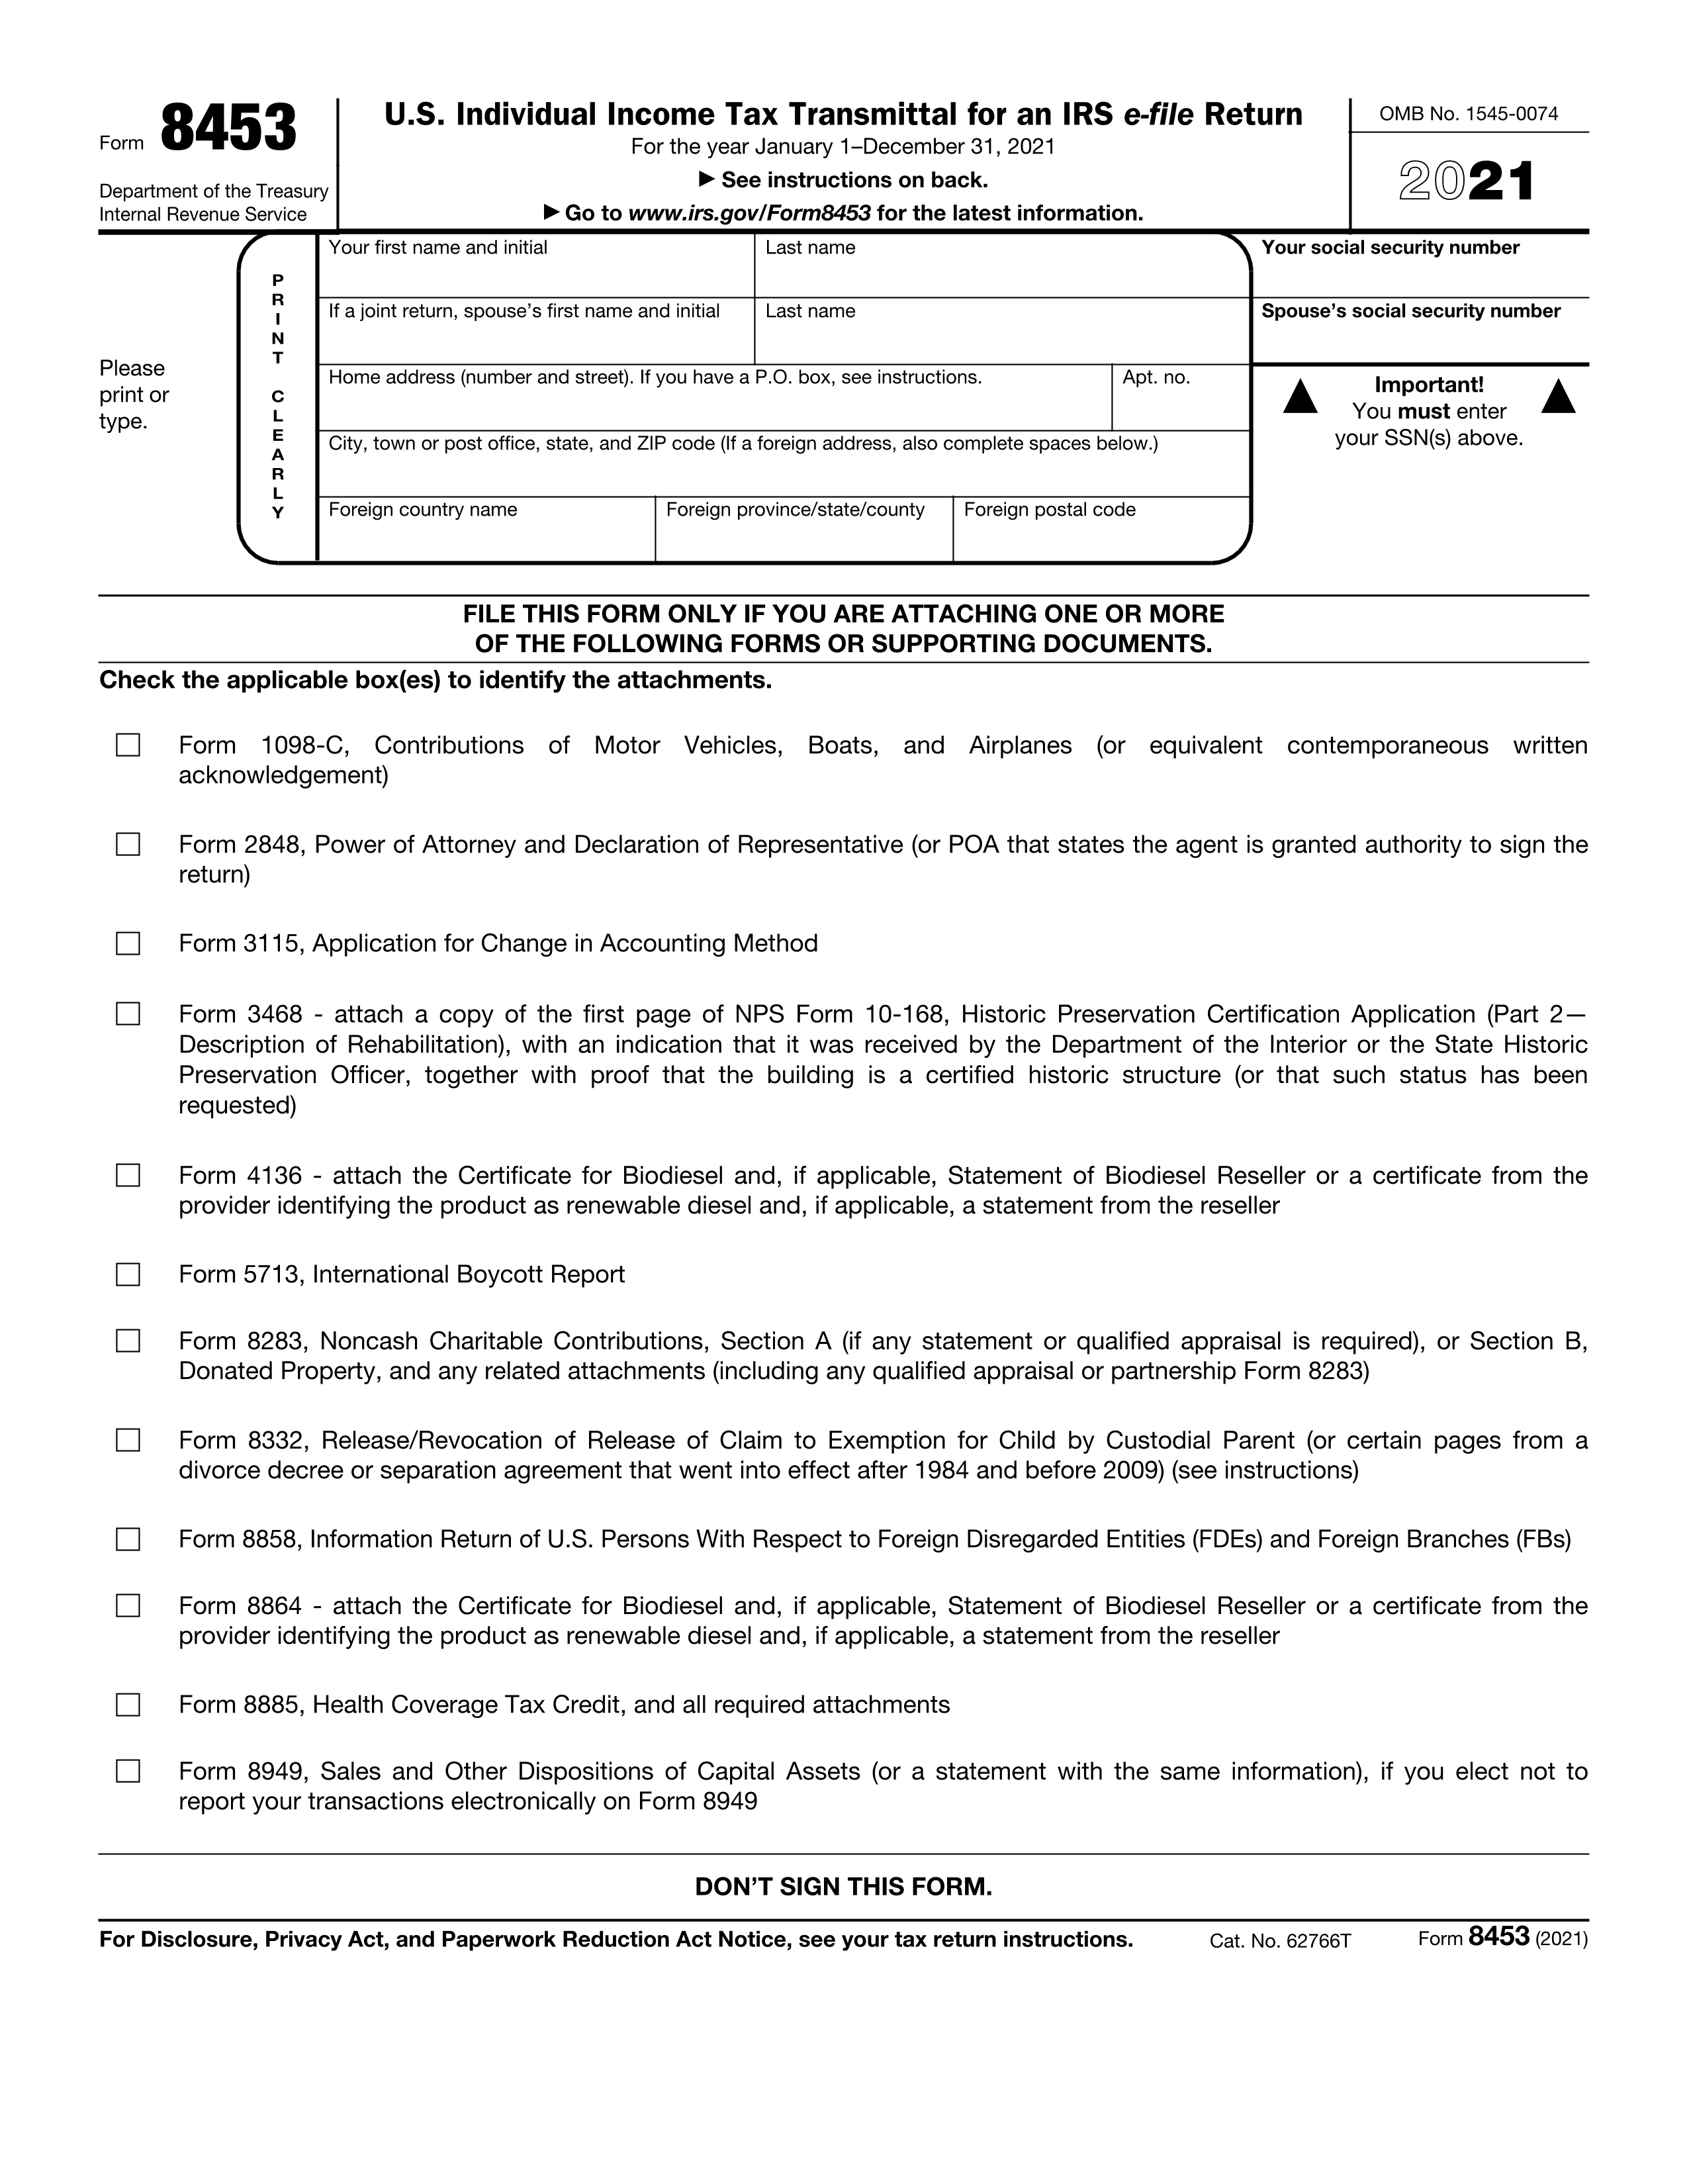 IRS Form 8453